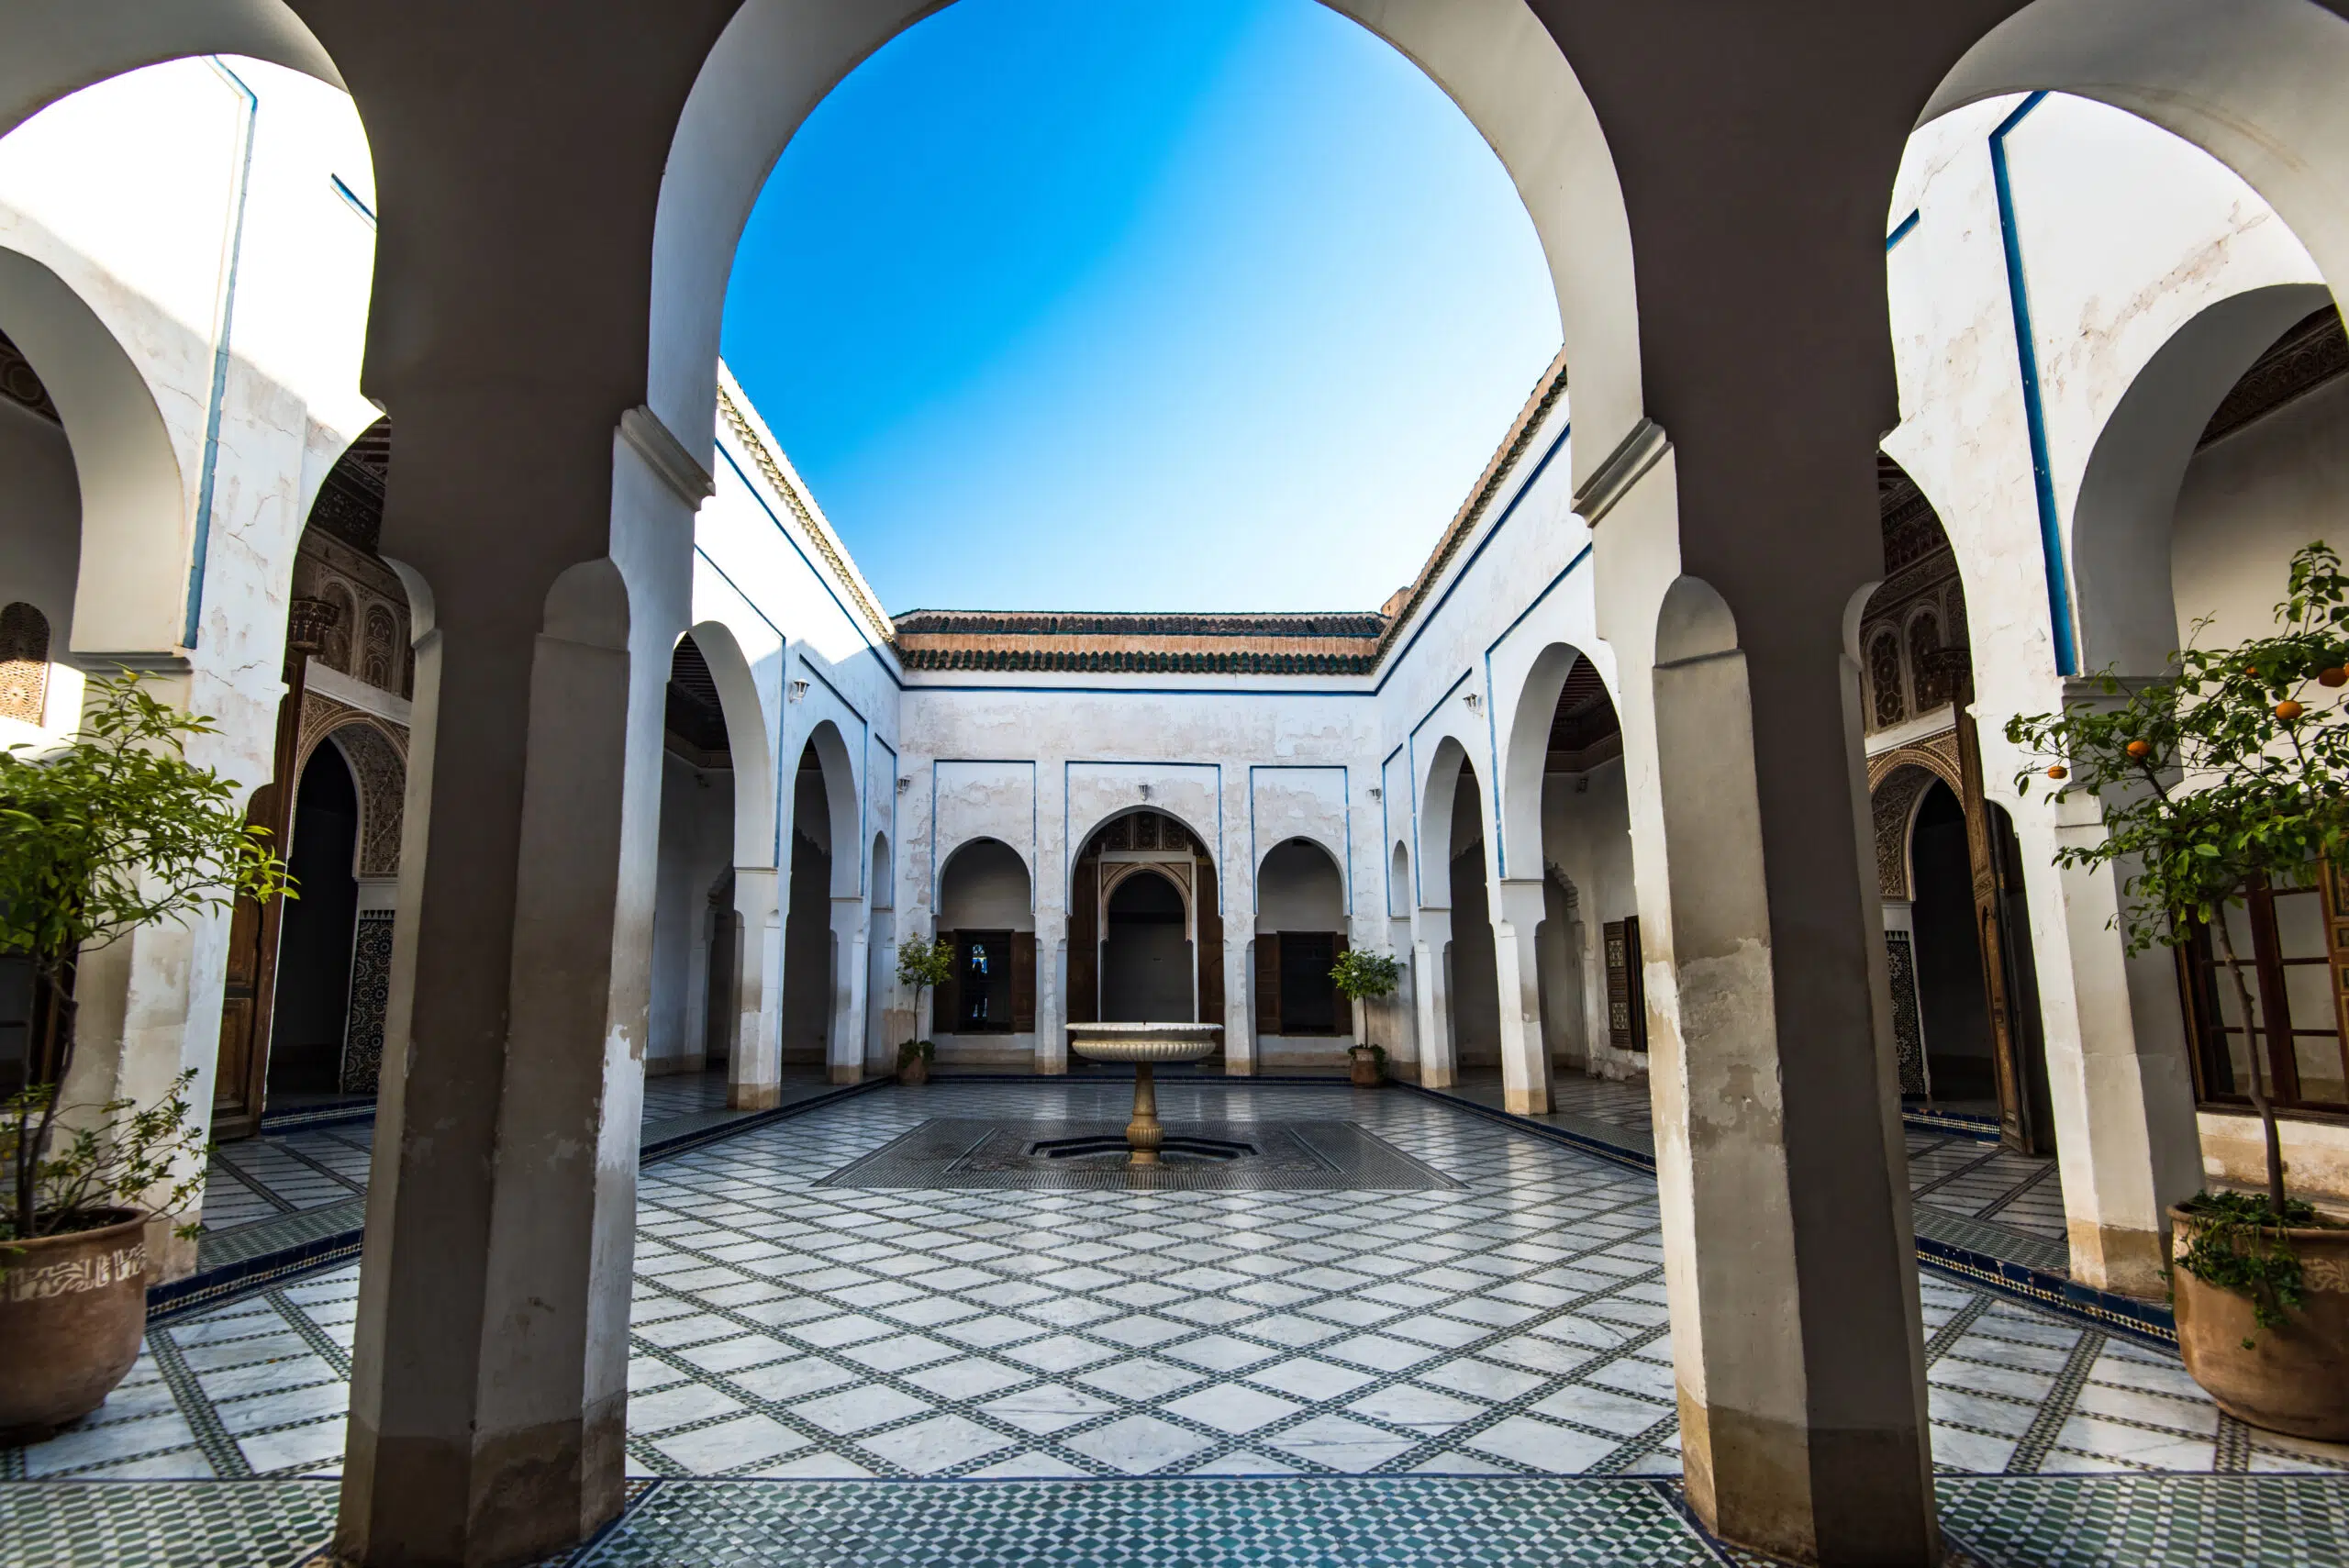 Courtyard with fountain, Bahia Palace,Morocco.